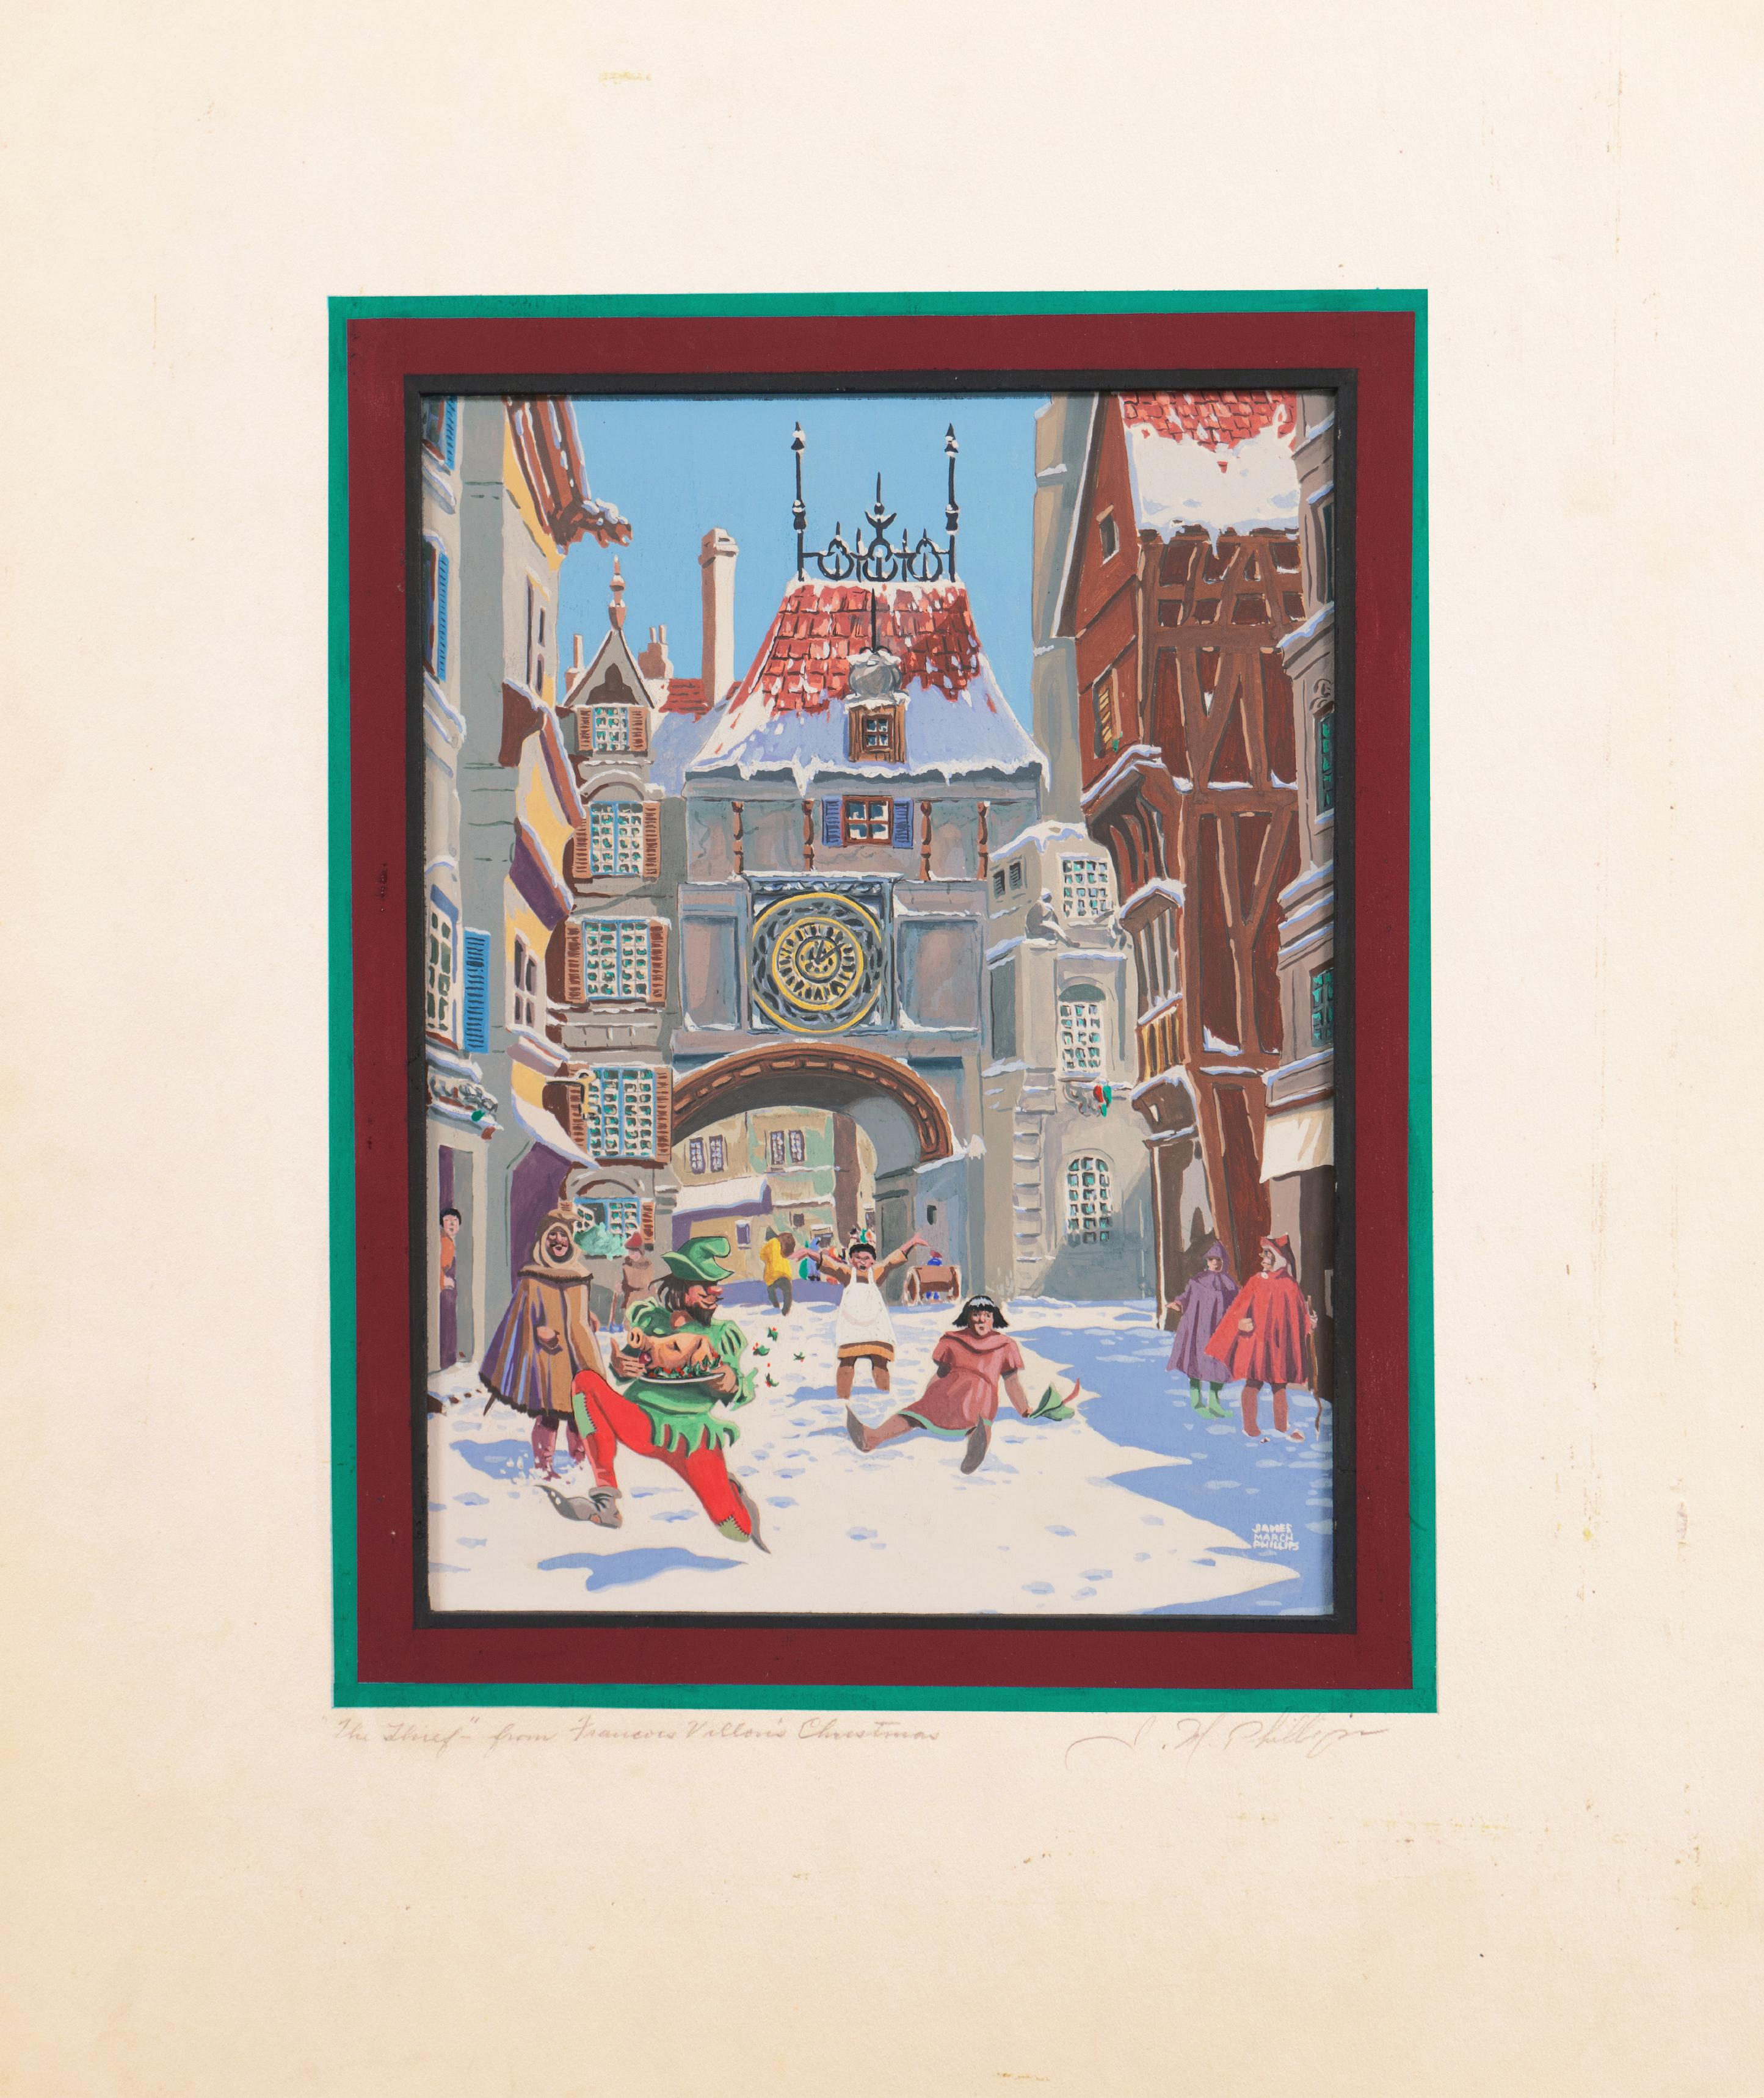 'The Thief from François Villon's Christmas', San Francisco Bay Area Illustrator For Sale 1